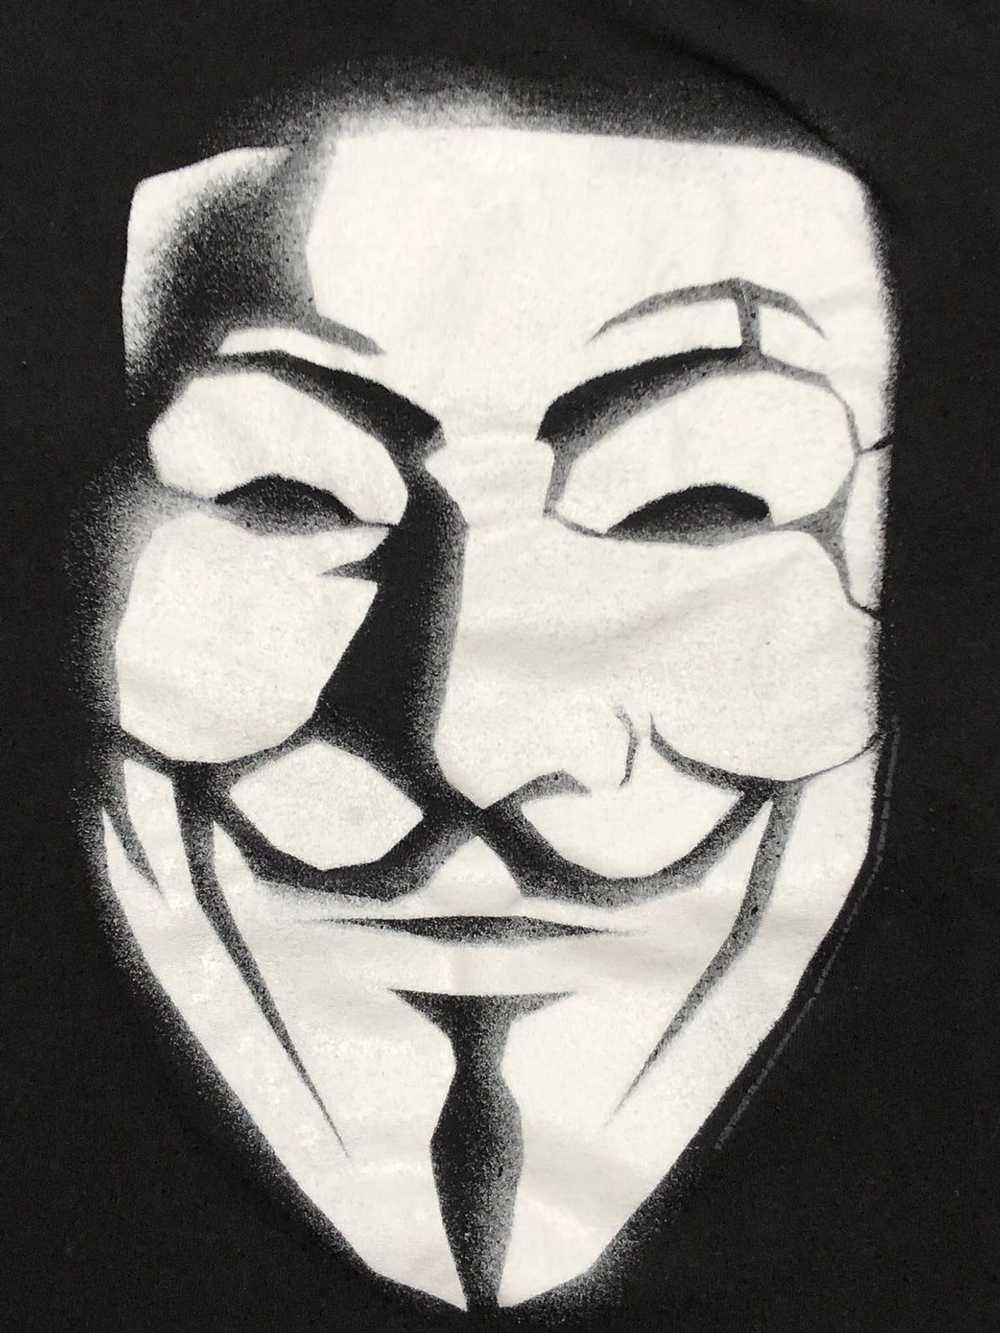 Dc Comics 2015 V for Vendetta Tee - image 2